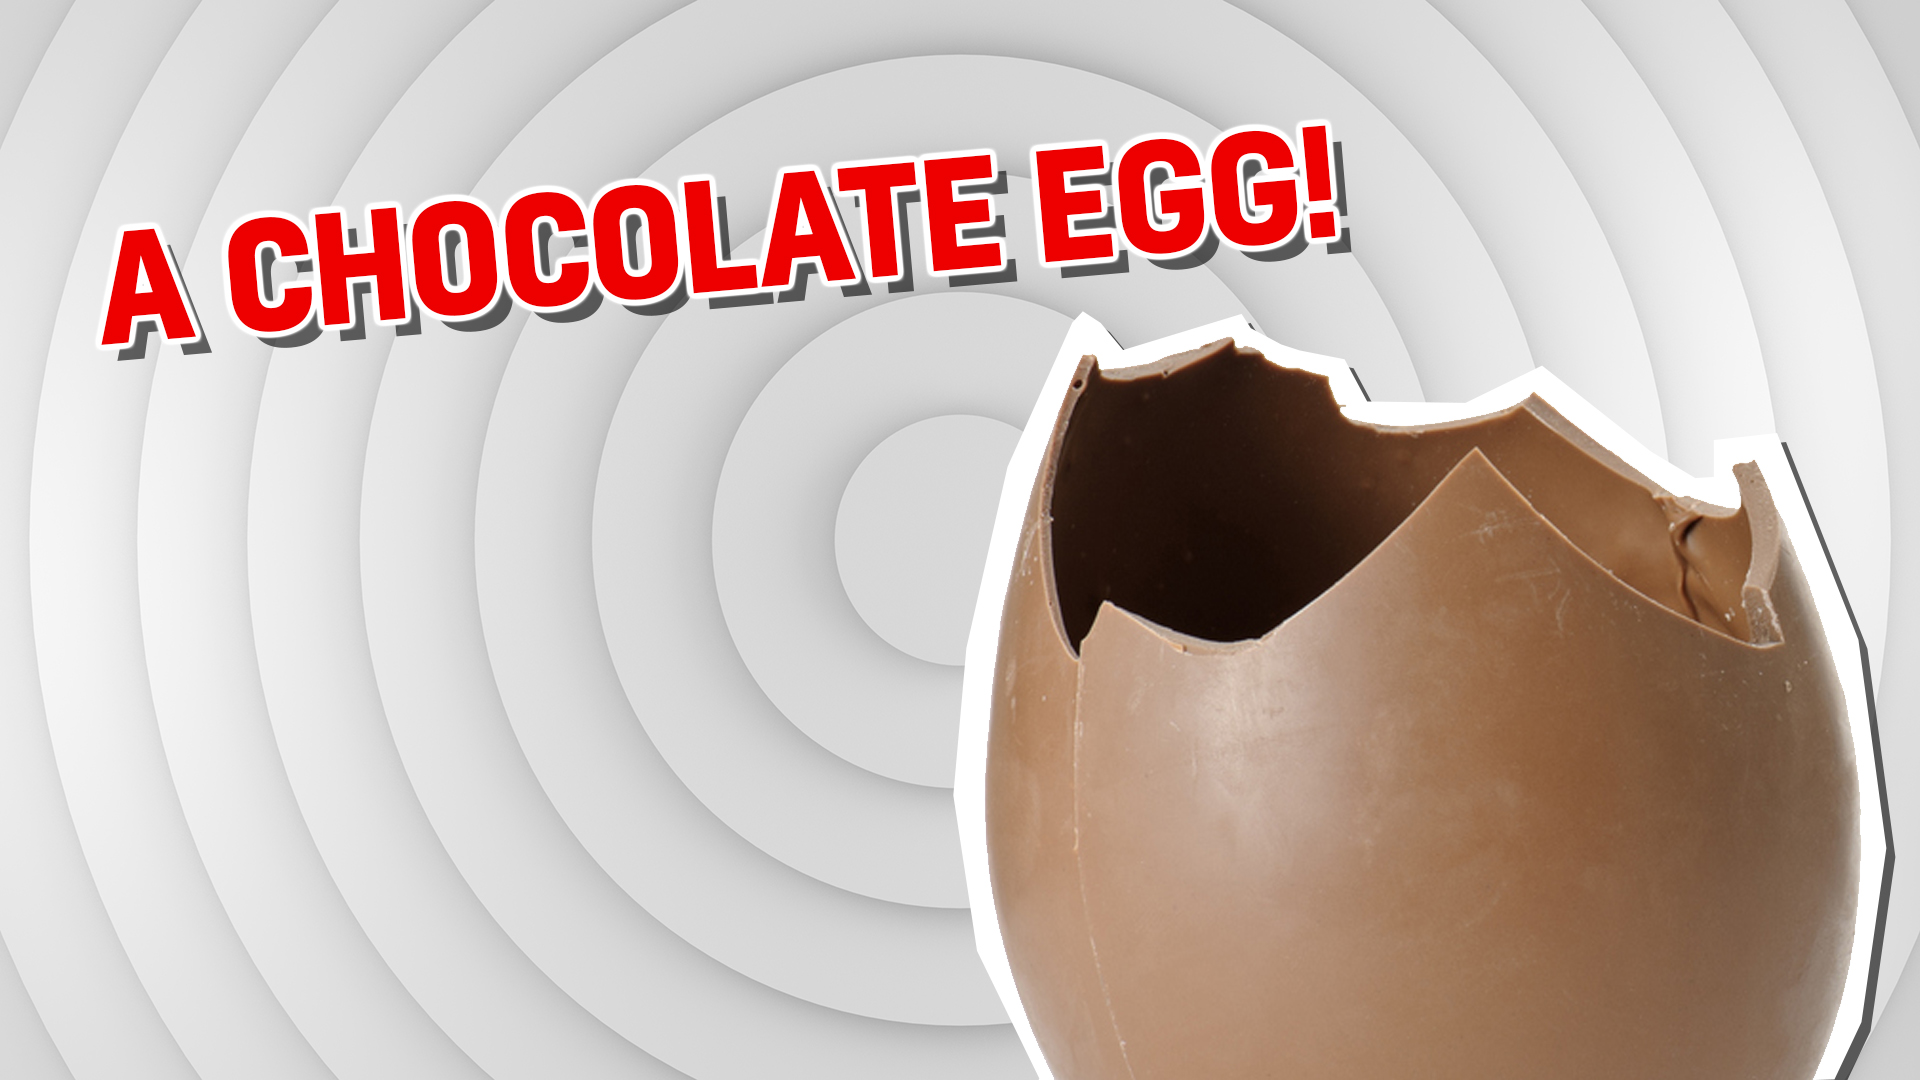 A chocolate egg